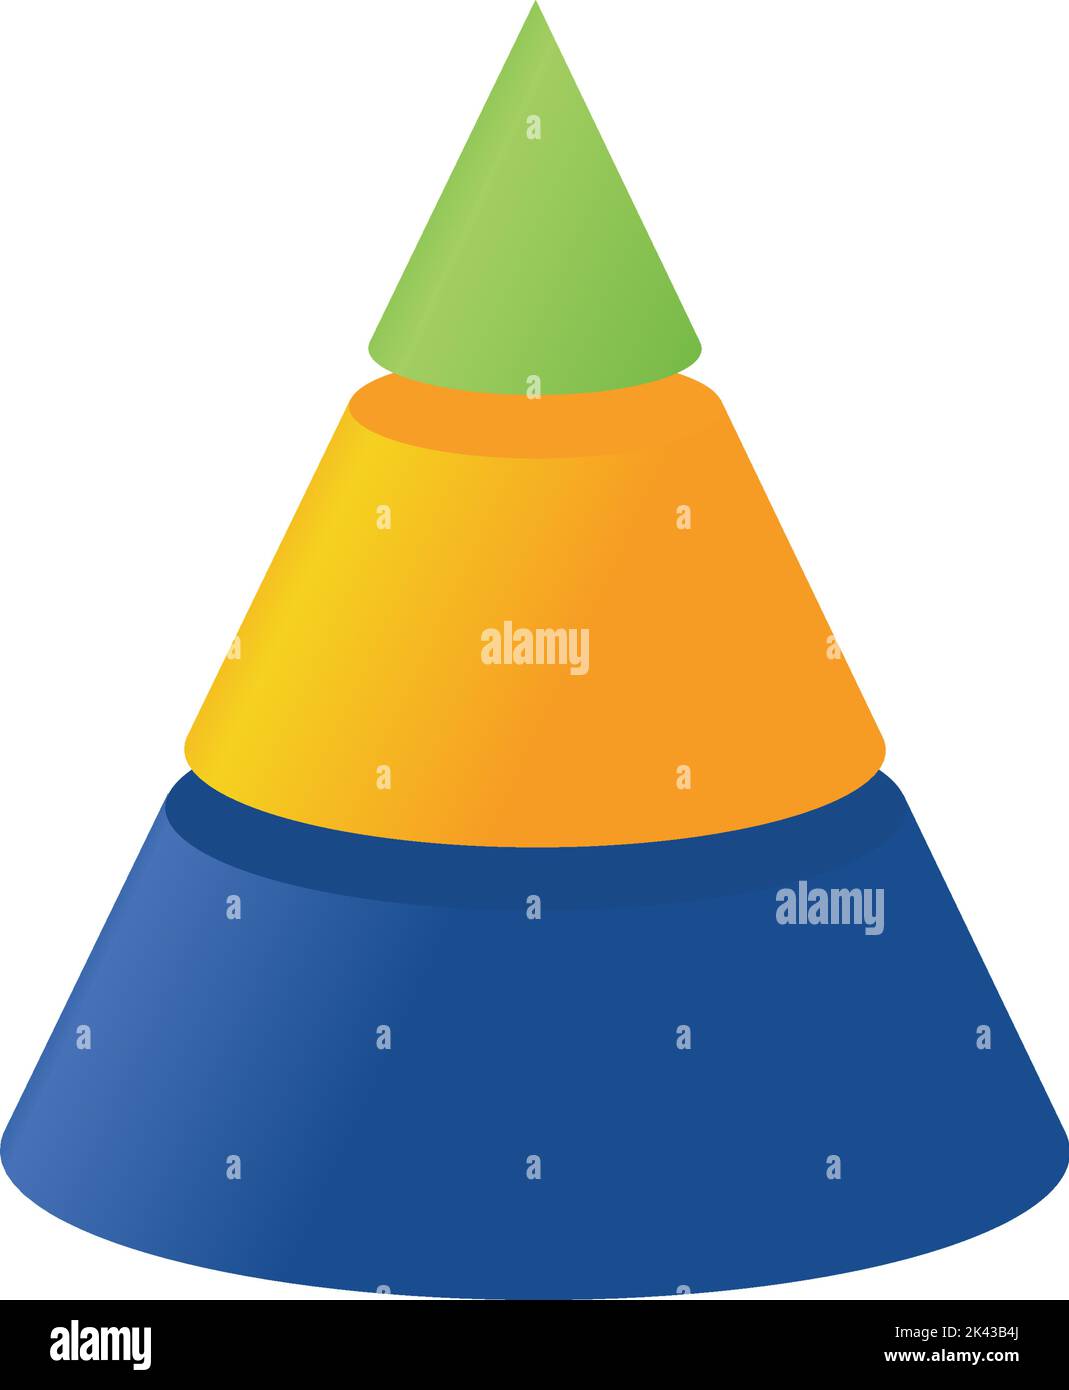 3D Illustration Infografik Vorlage mit Kegel in drei Teile geteilt. Symbole  für pyramidale Formen Stock-Vektorgrafik - Alamy